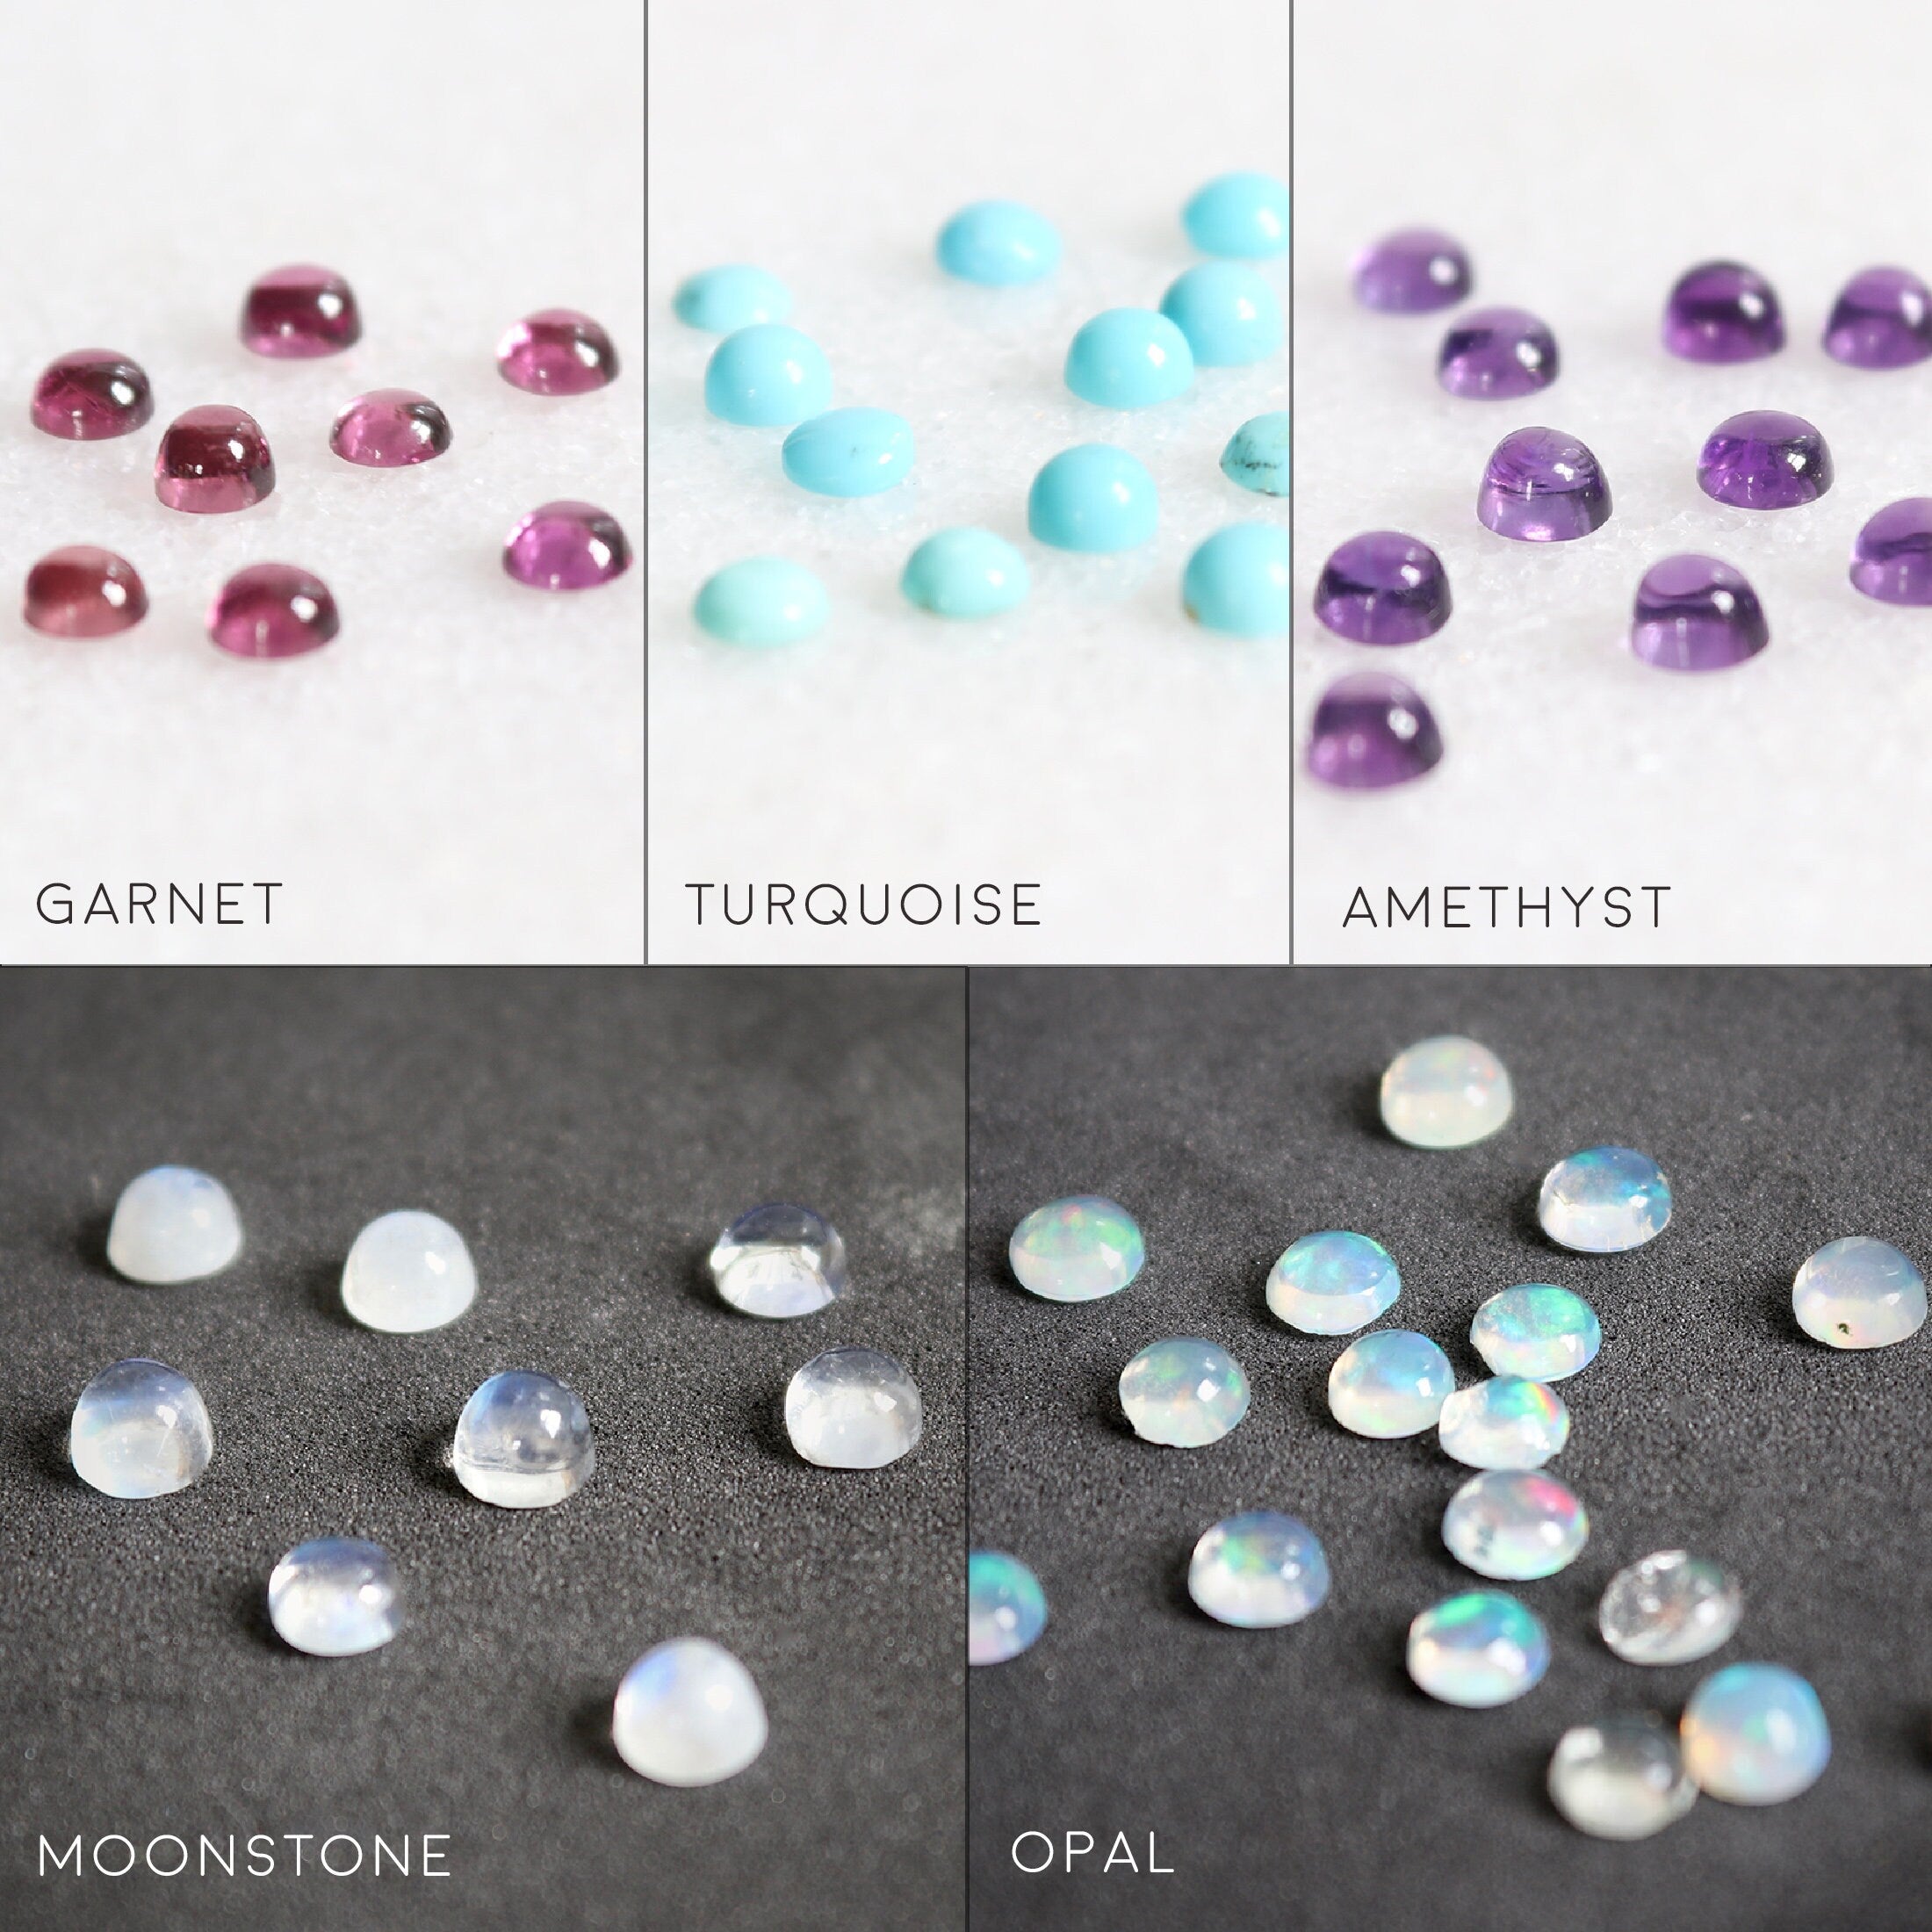 boho crescent moon earrings with gemstone